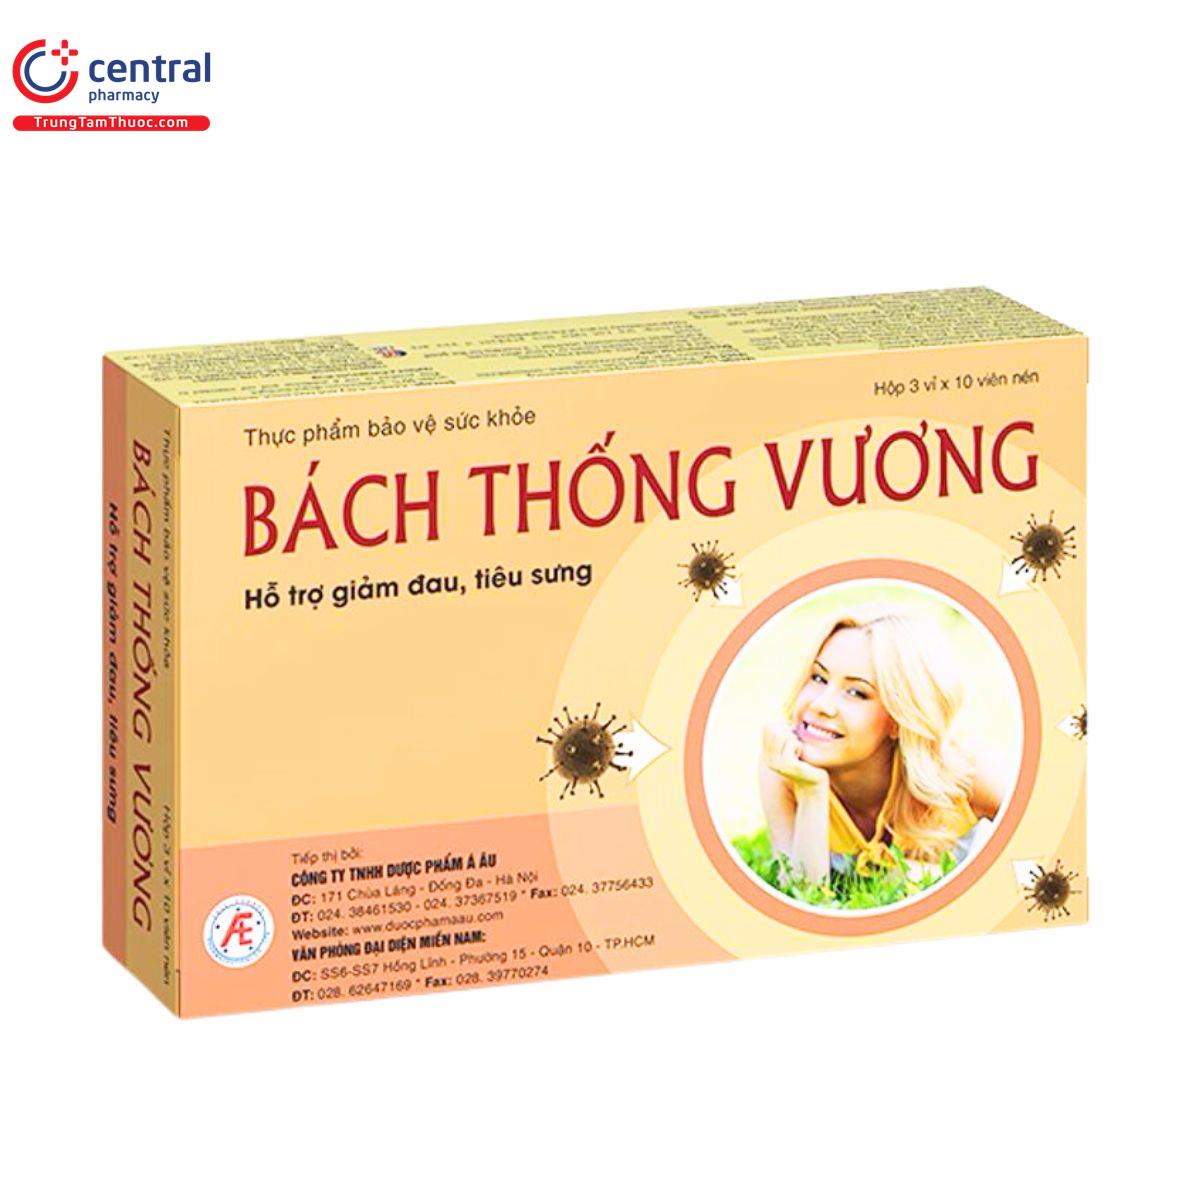 bach thong vuong 1 B0837